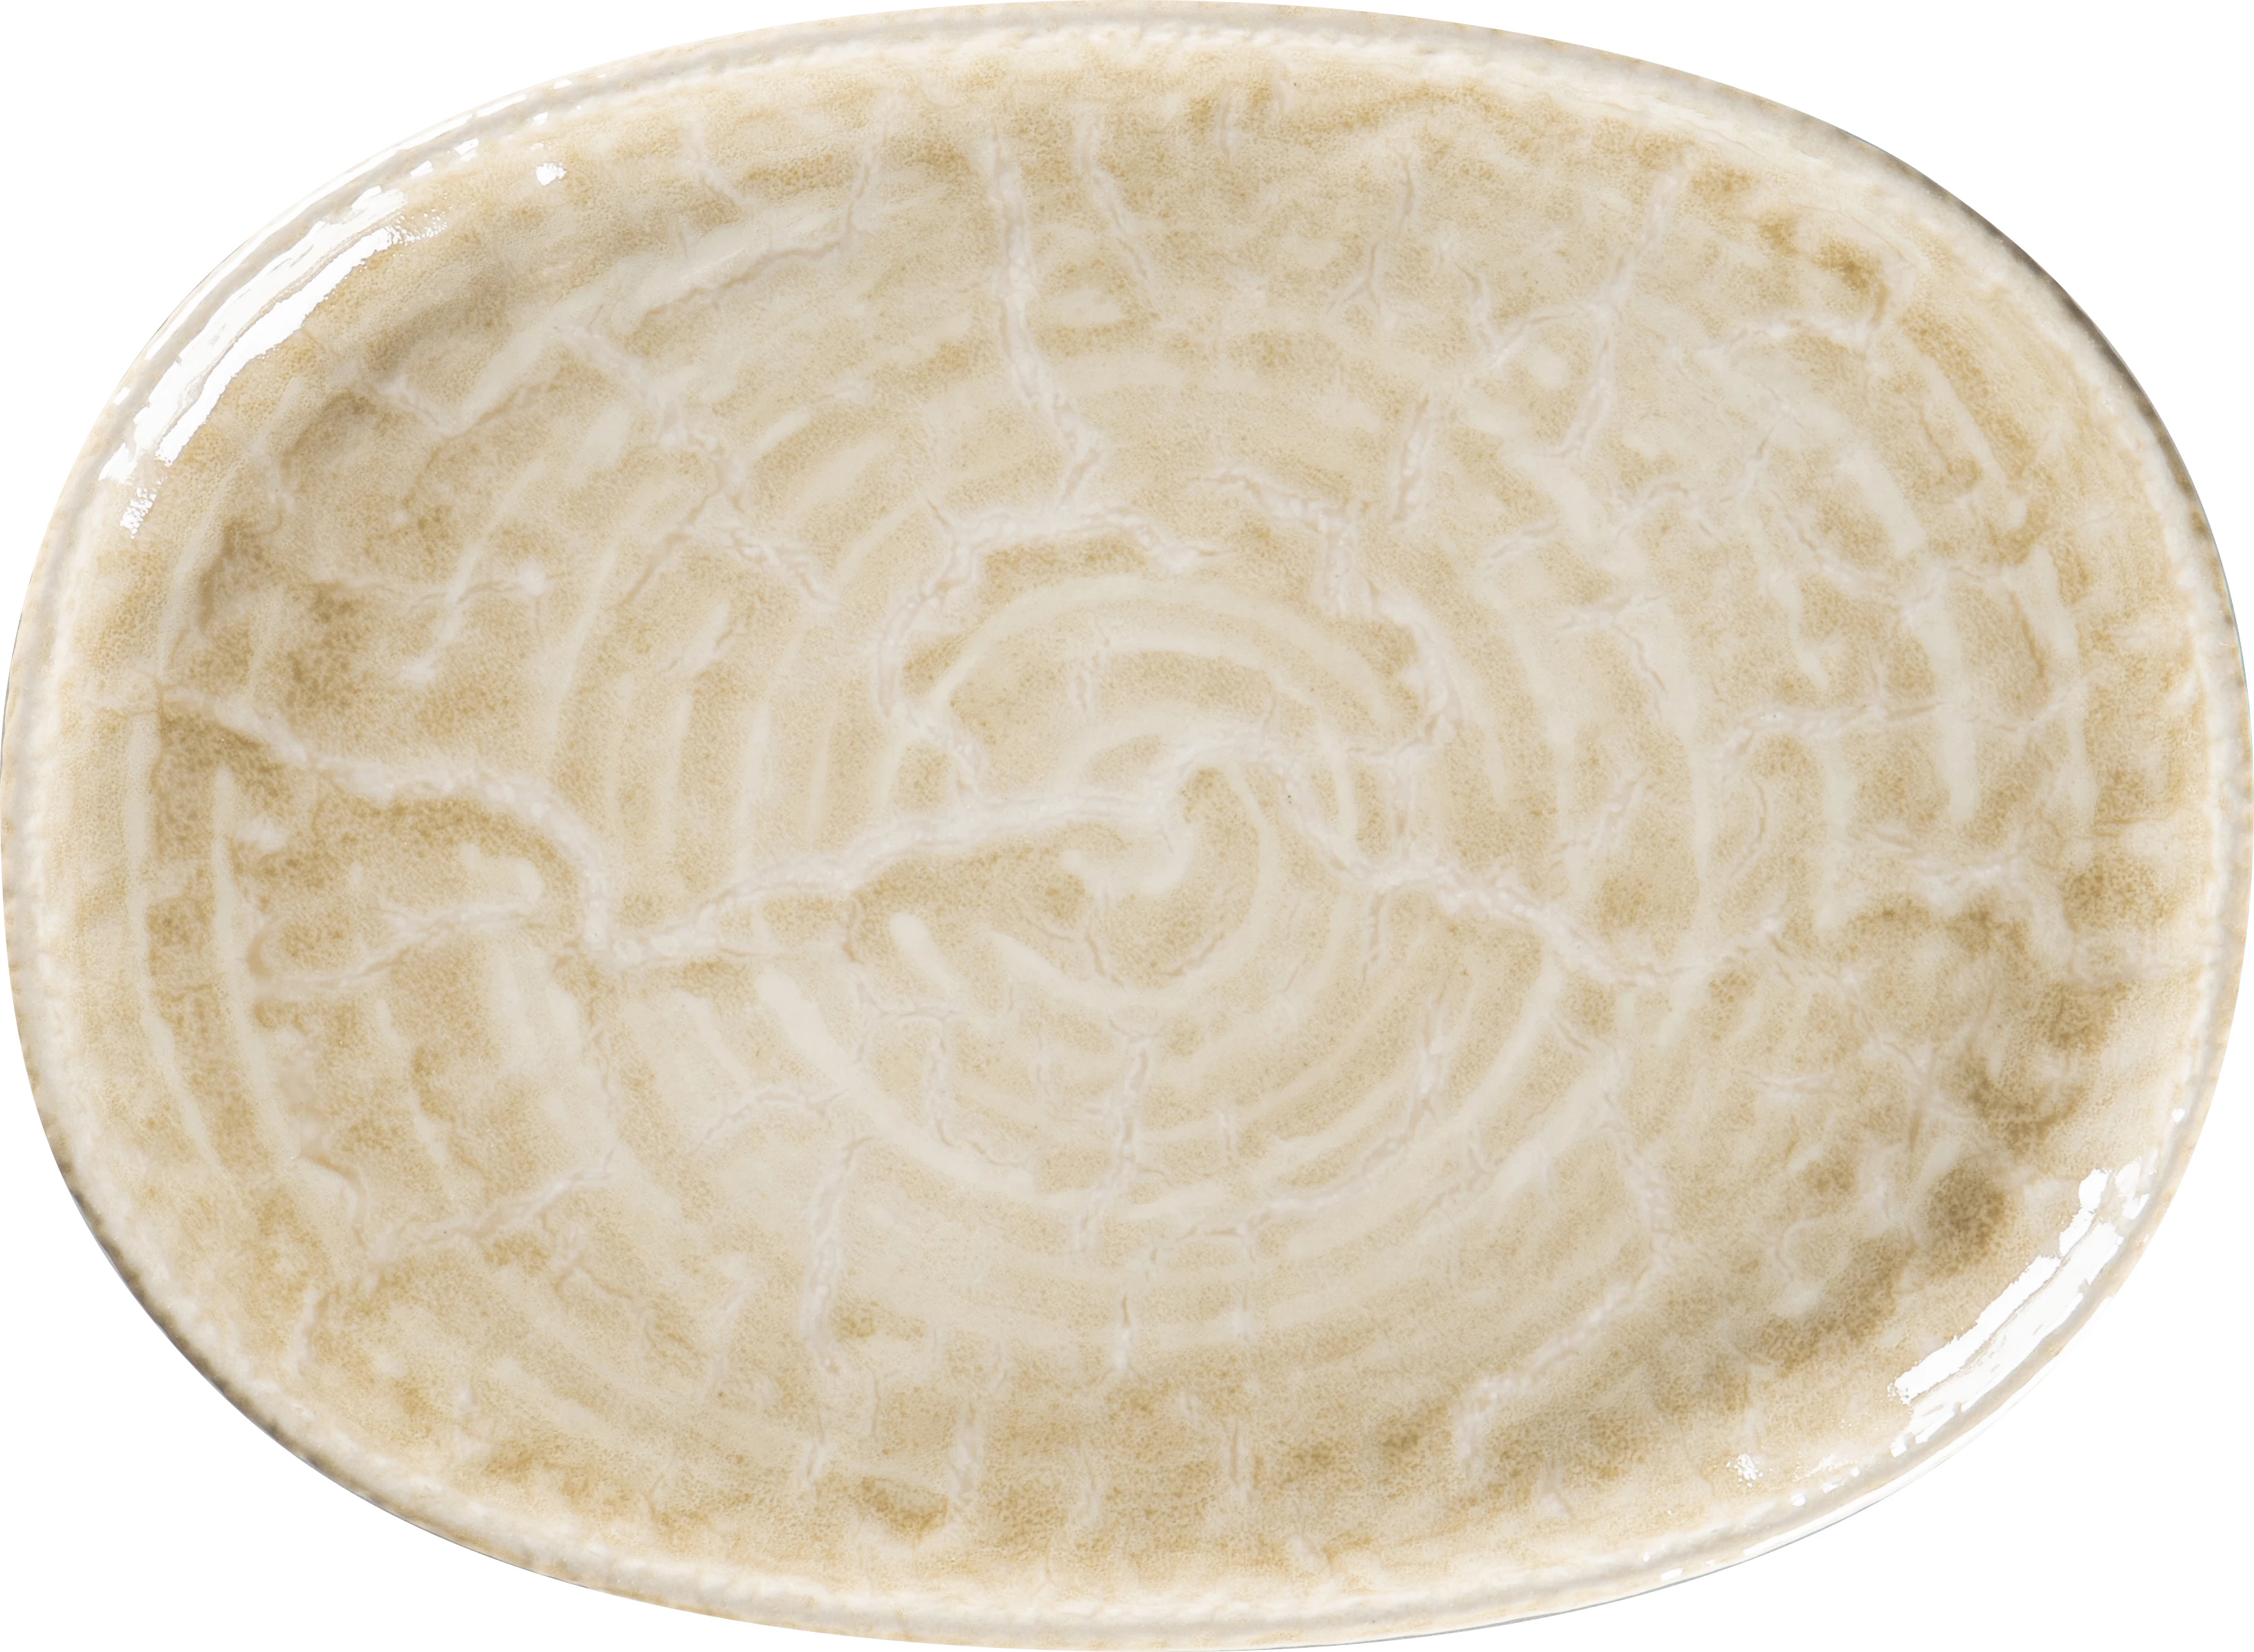 RAK Krush tallerken, oval, sand, 28 x 20,5 cm